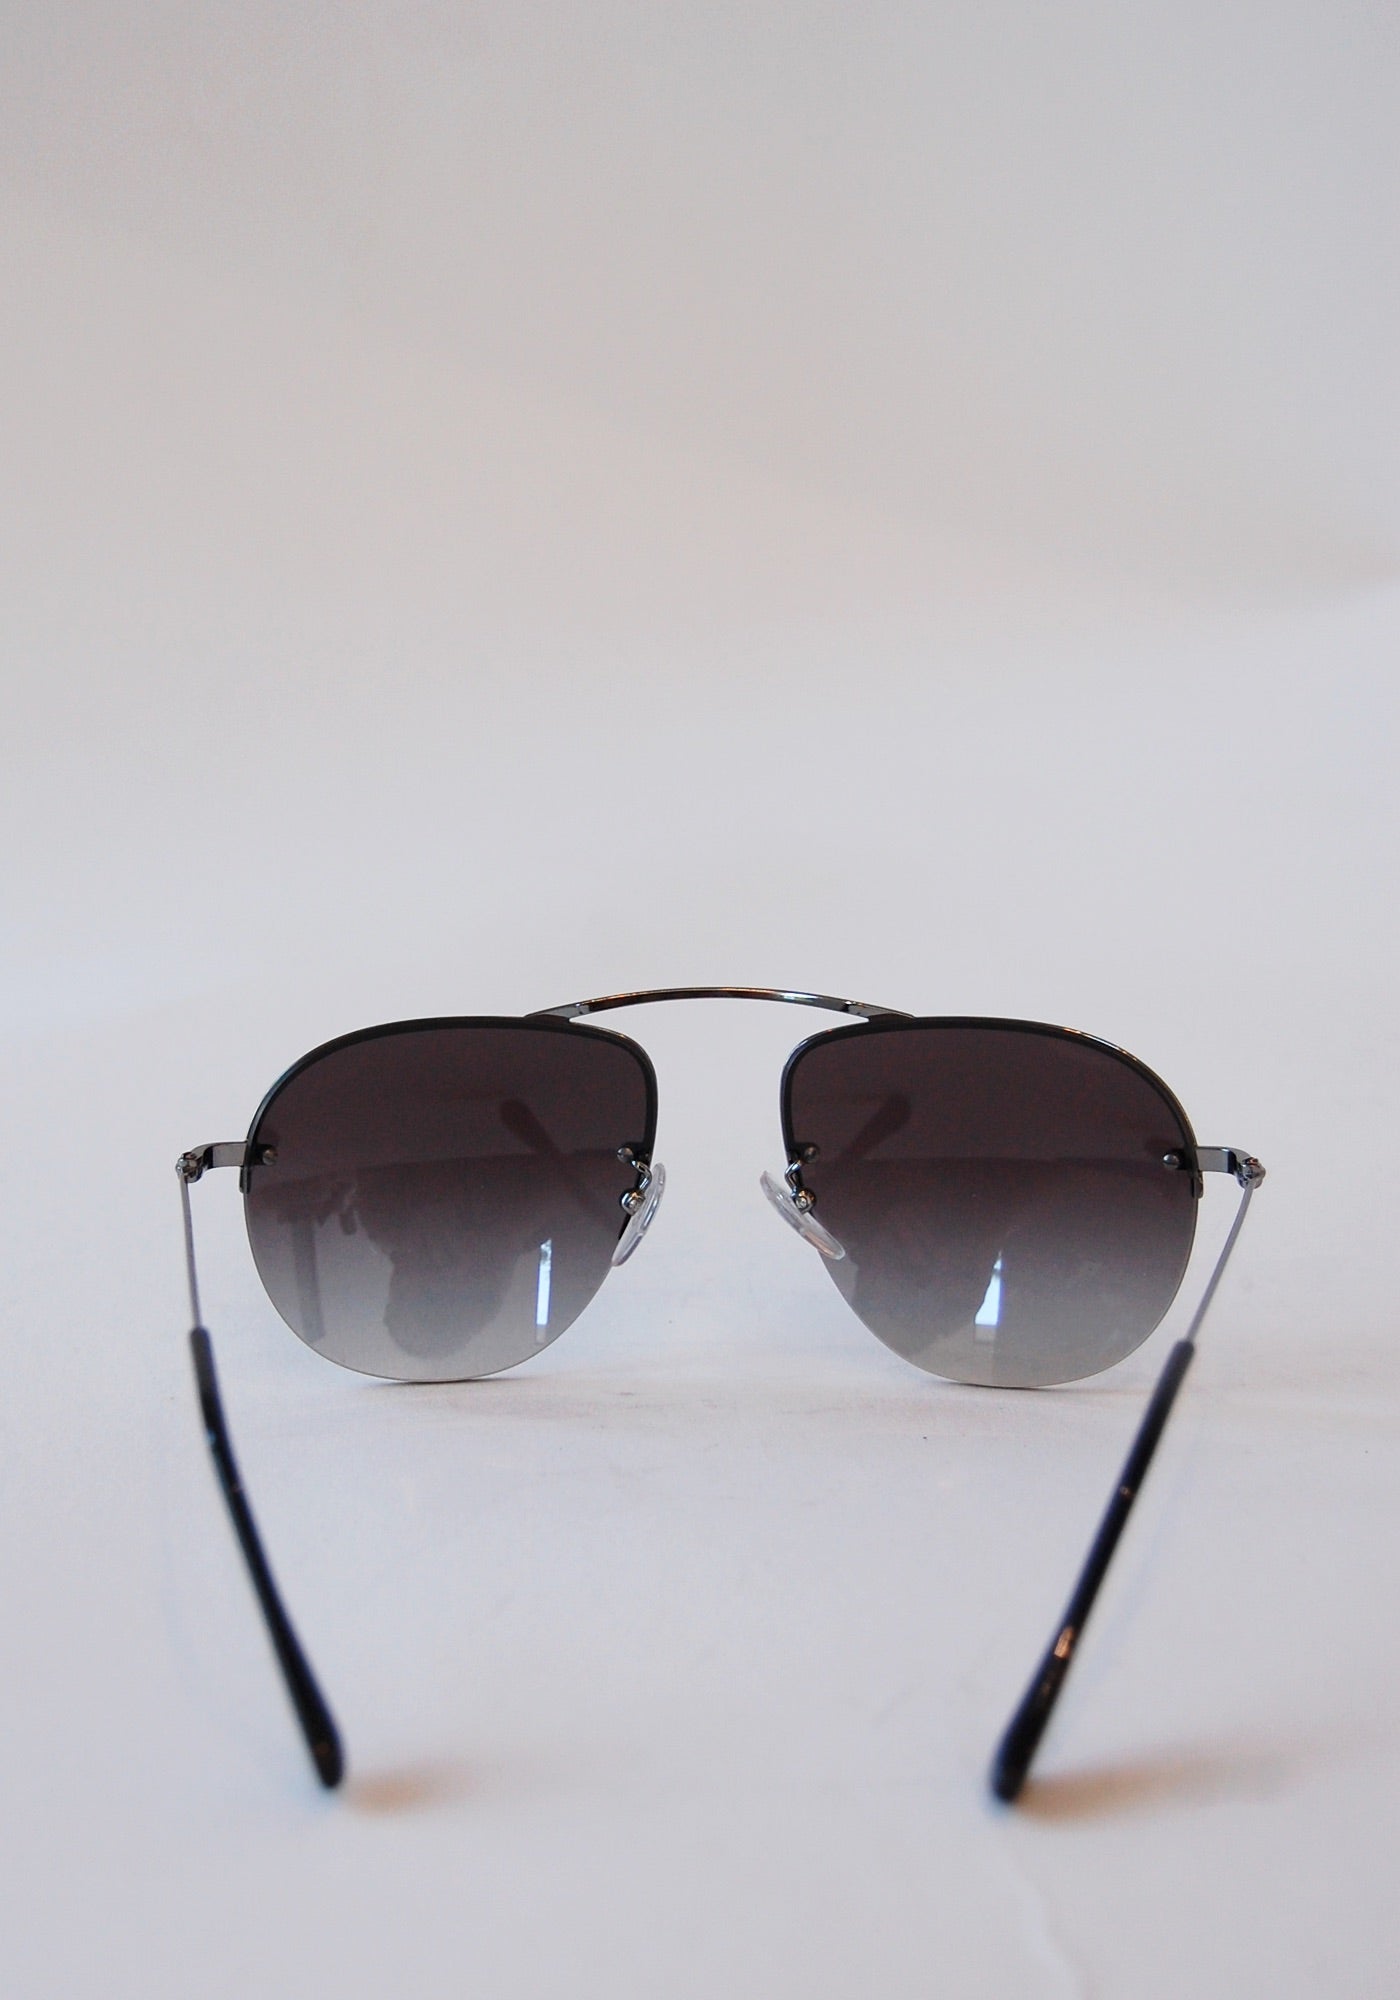 Prada Silver Sunglasses